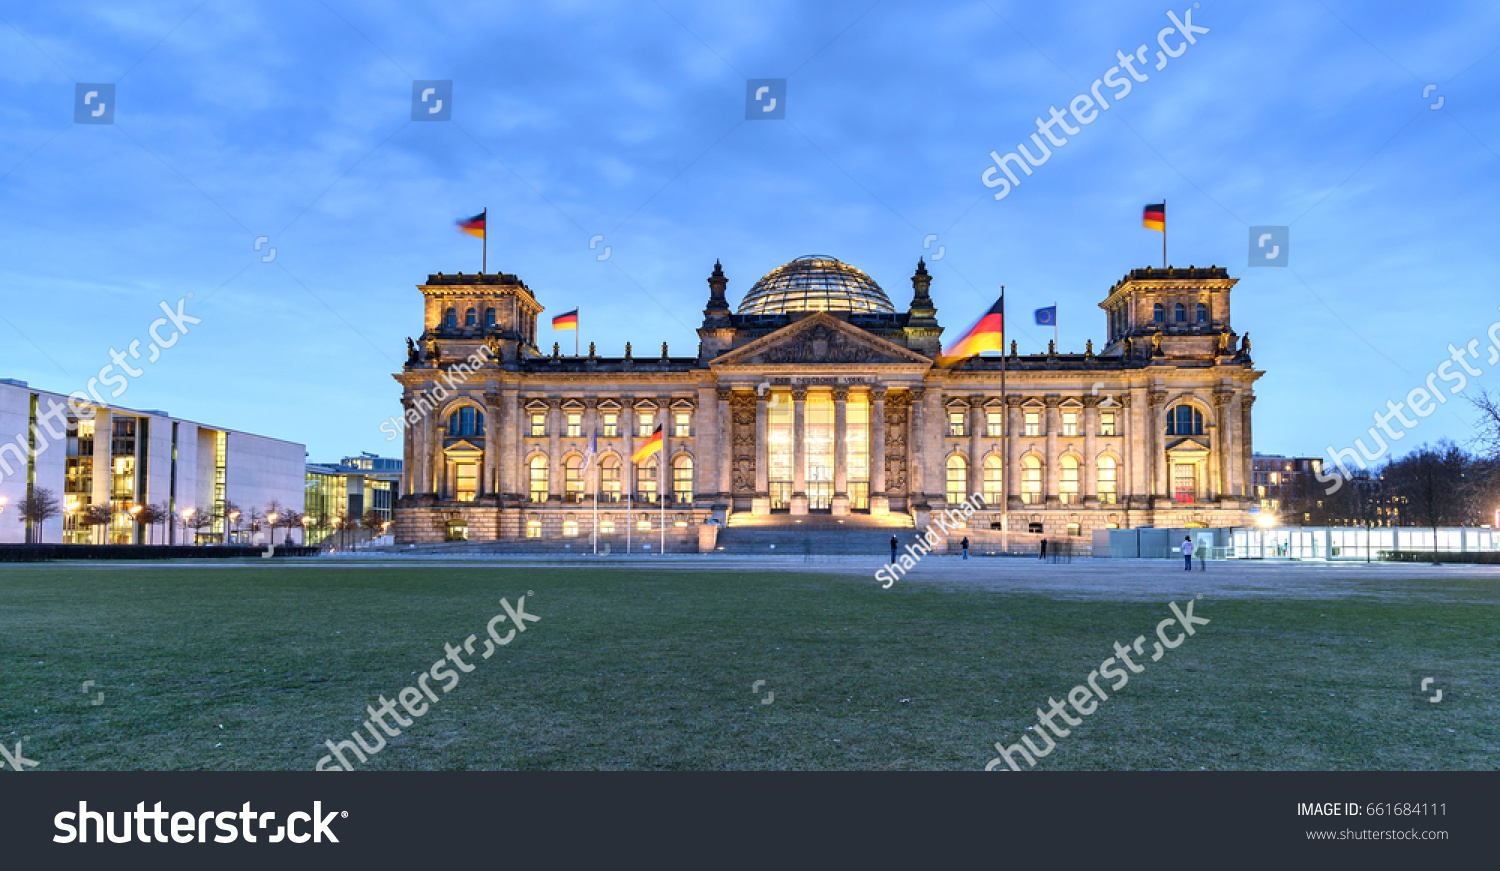 German parliament (Reichstag) building in Berlin, Germany #661684111